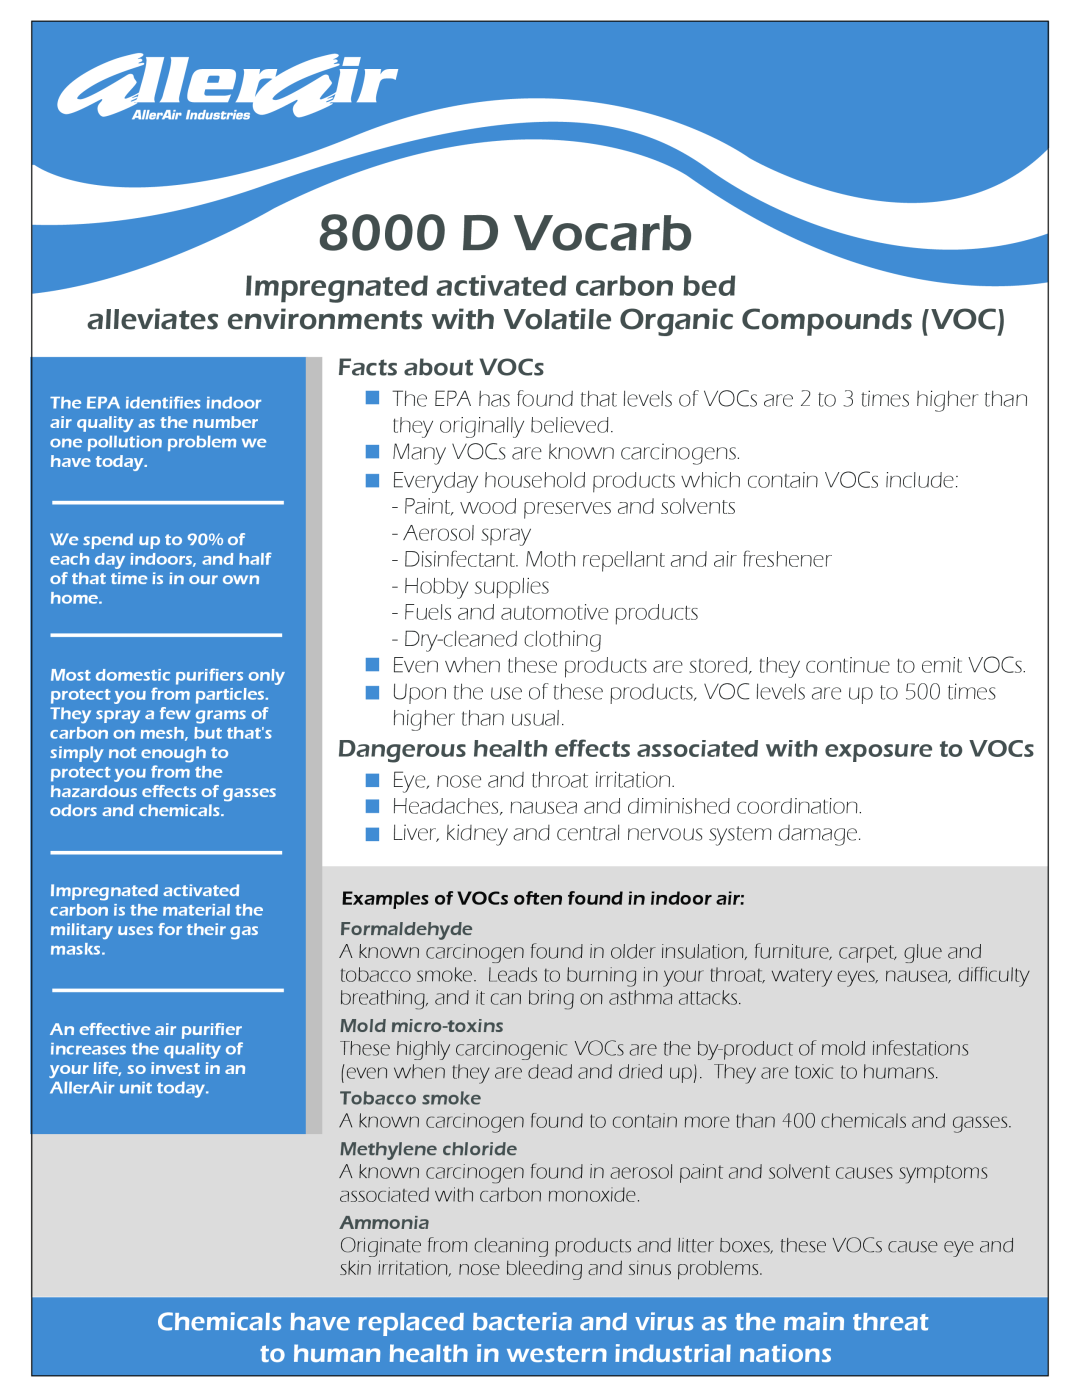 AllerAir 8000 D Vocarb manual Impregnated activated carbon bed, Facts about VOCs 